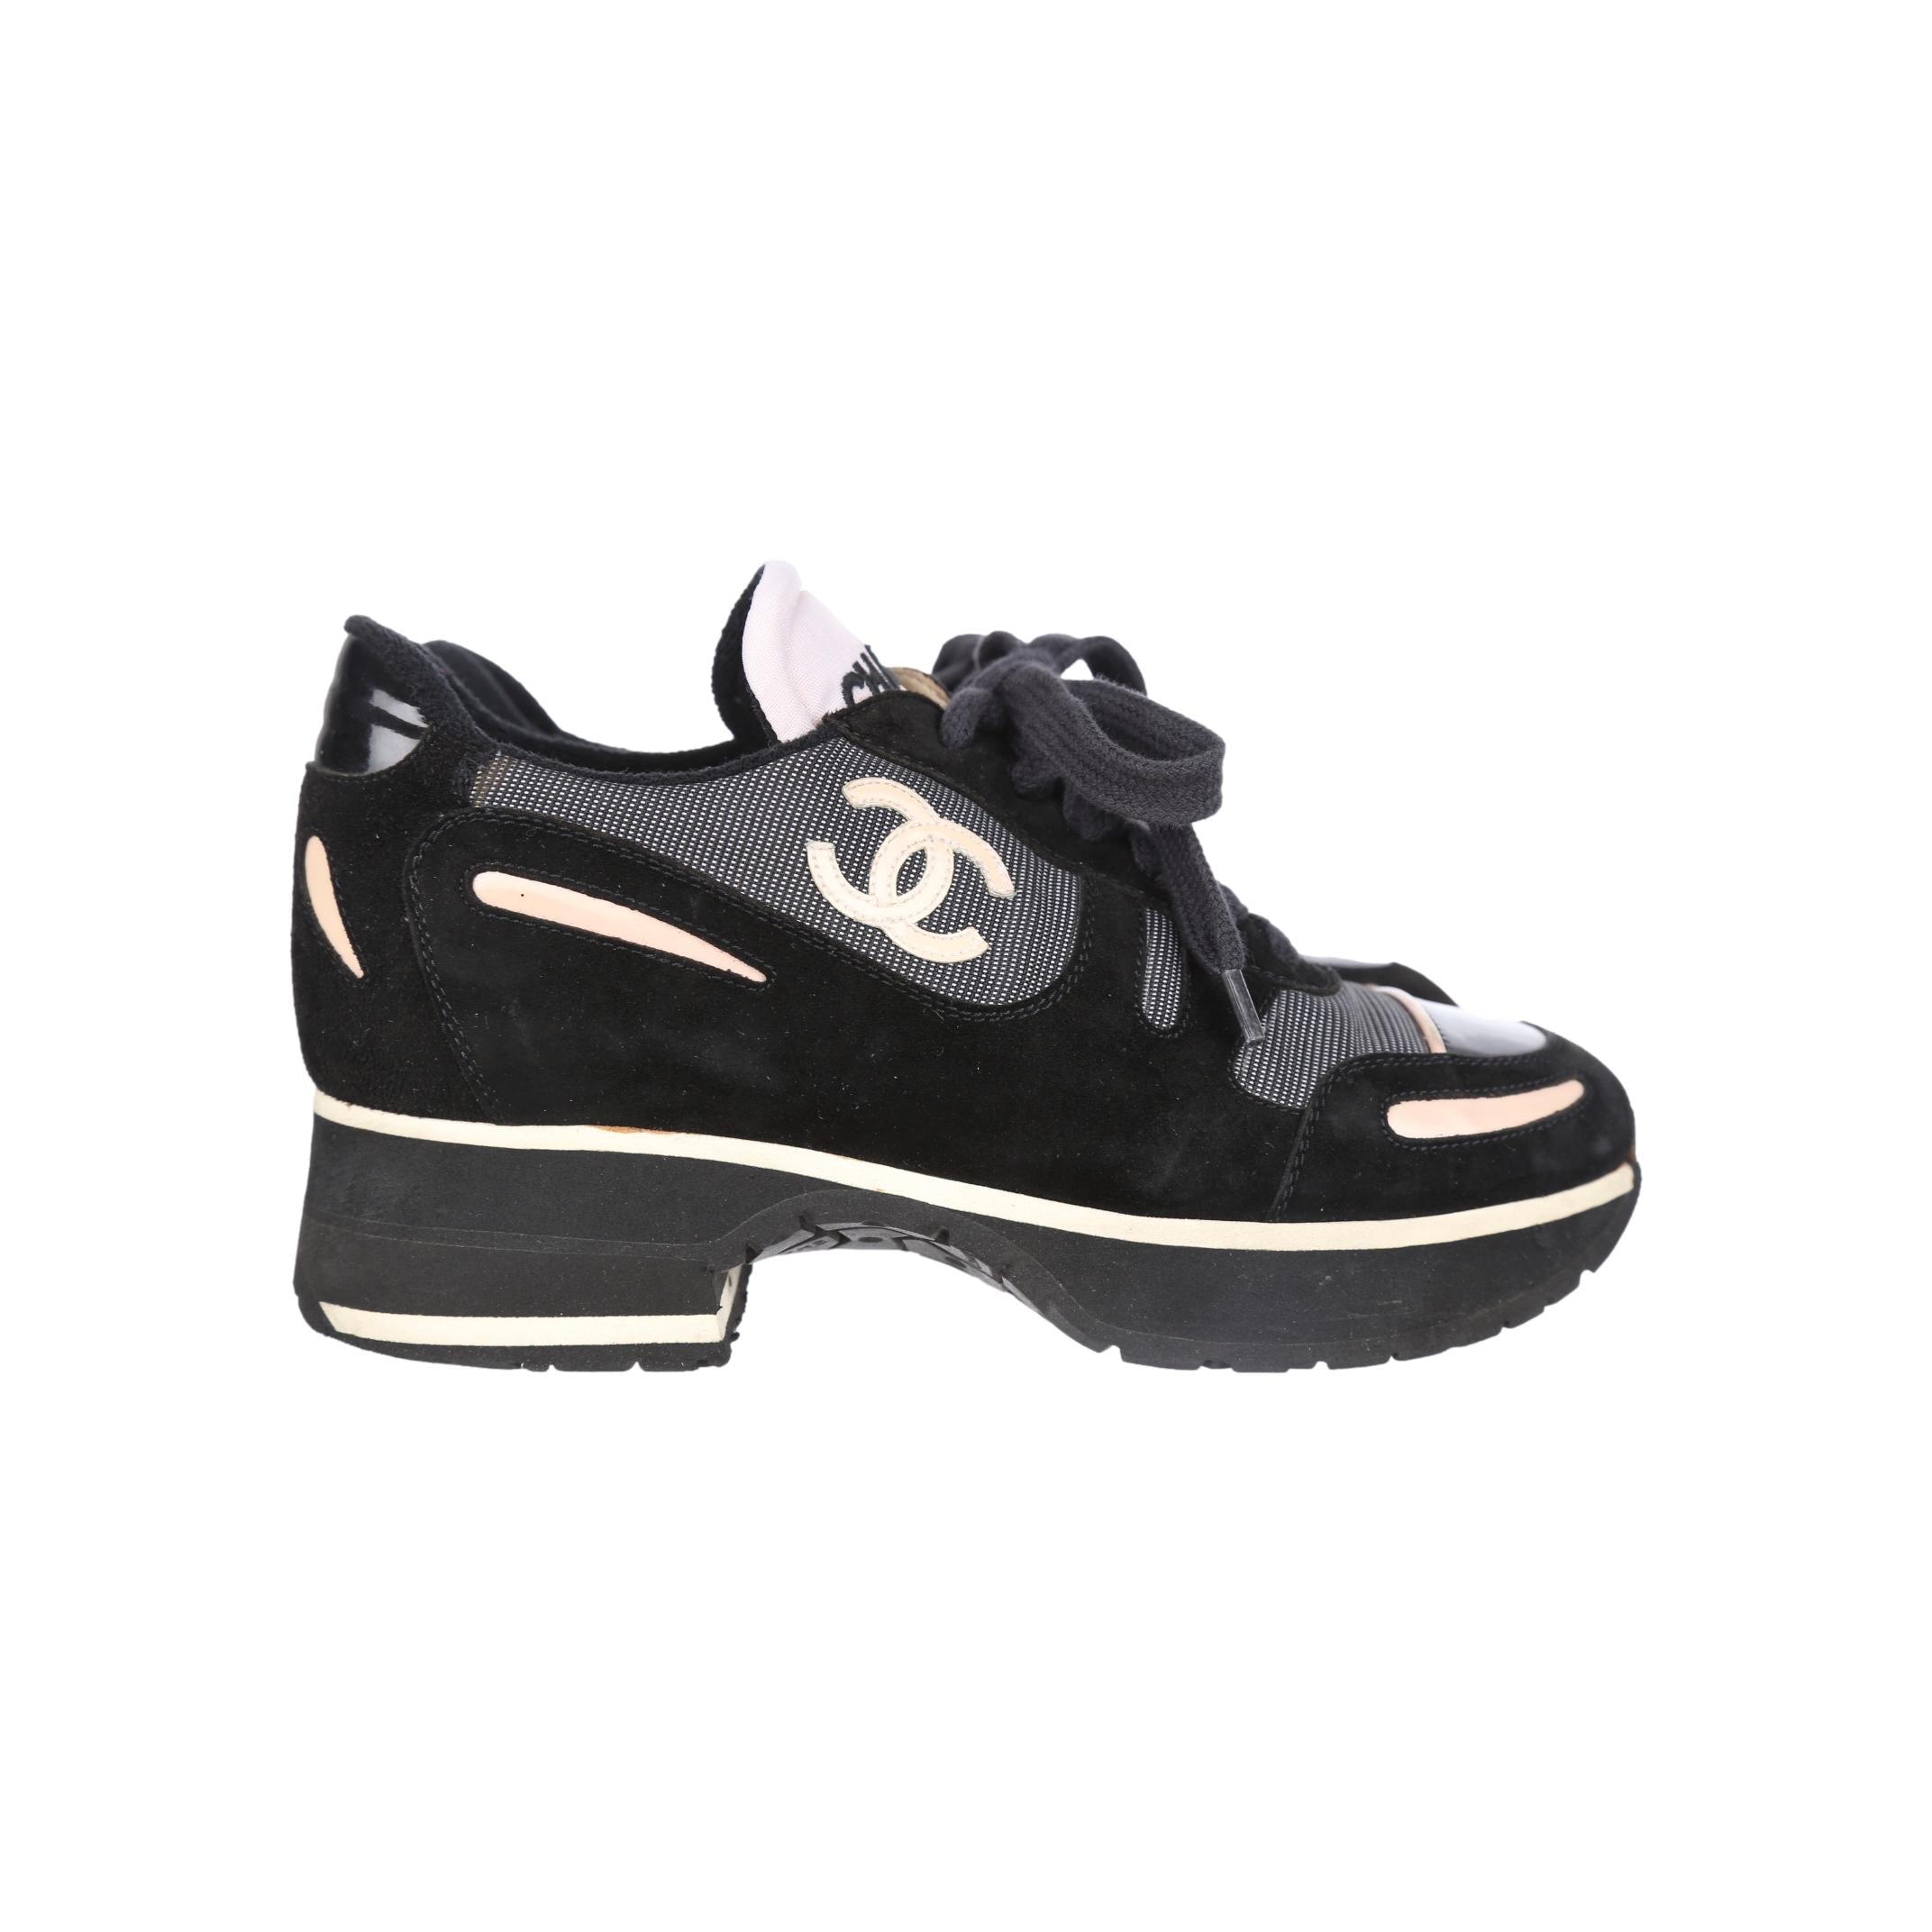 Women's Chanel Sneakers from $700